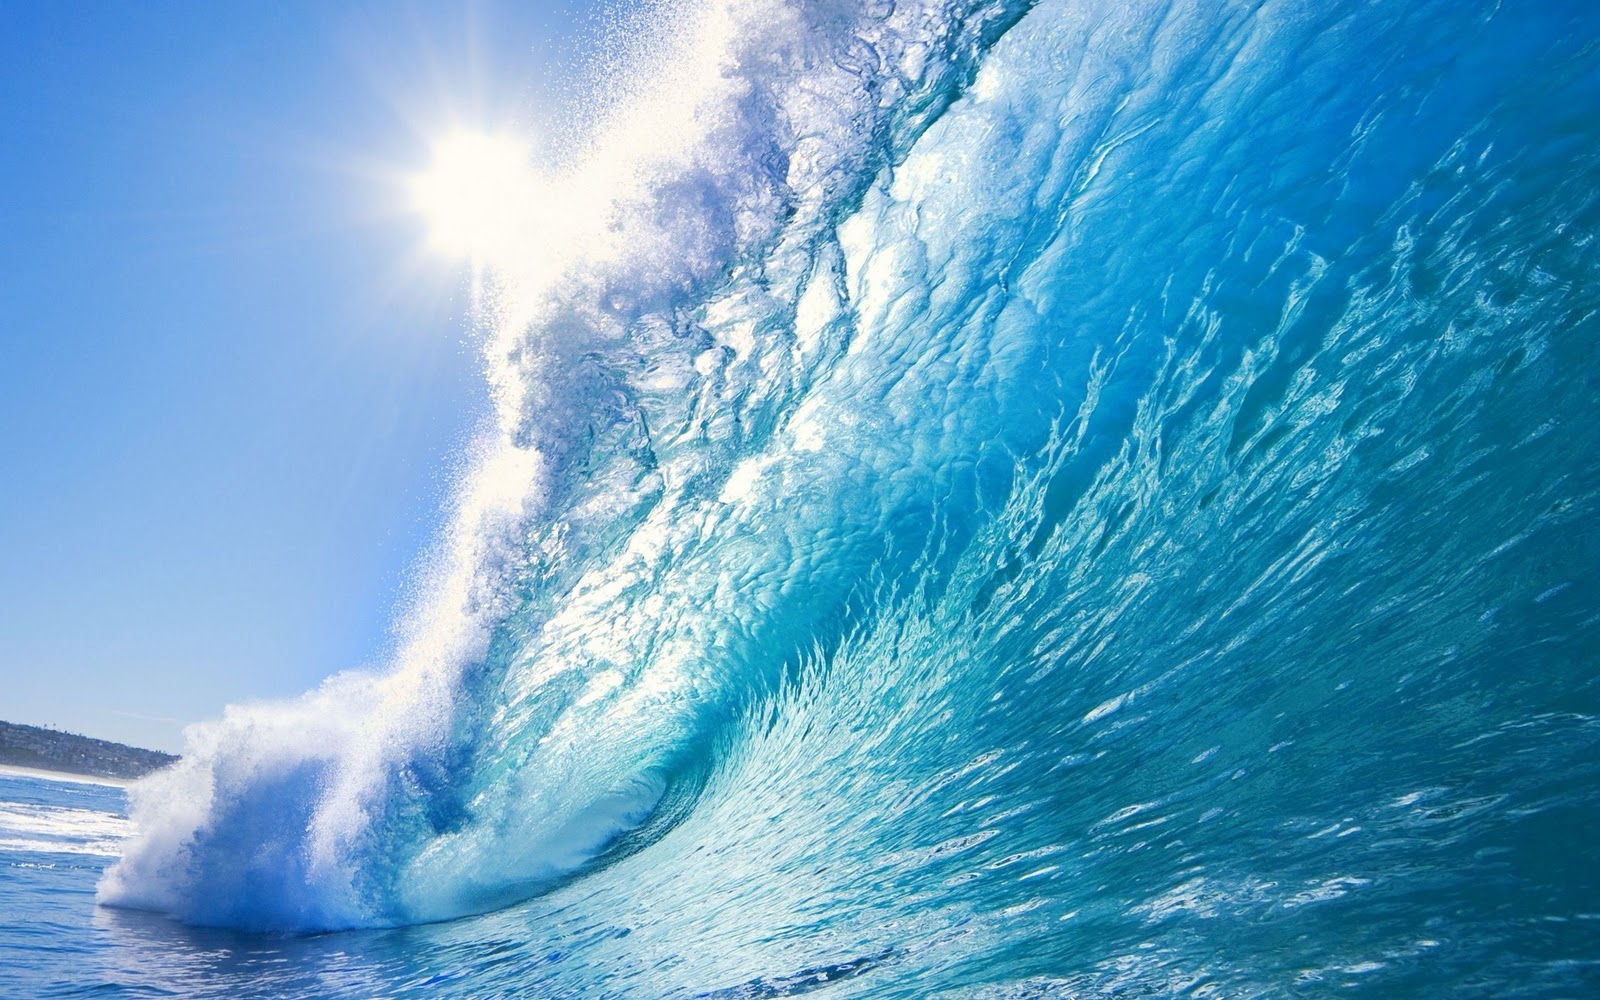 Beautiful Ocean Waves Amazing Sea Waves Cini Clips